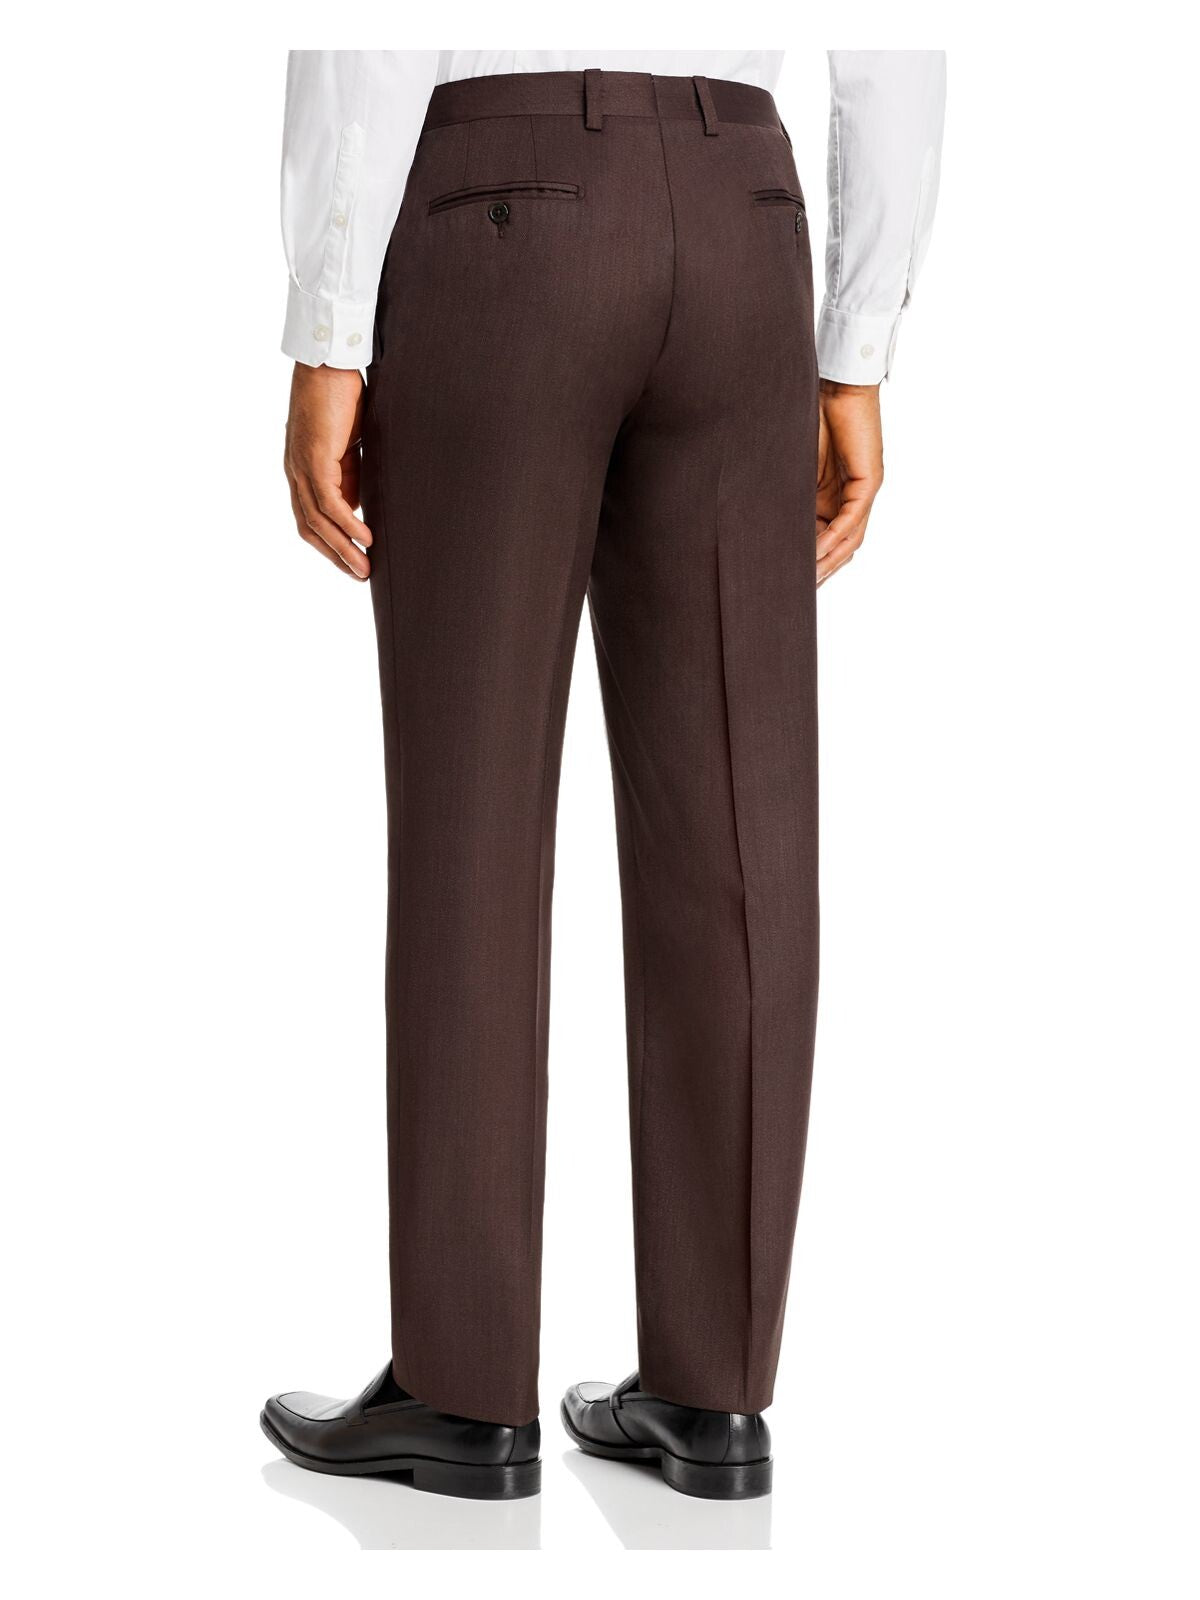 JACK VICTOR Mens Whipcord Brown Regular Fit Suit Separate Pants 36 Waist